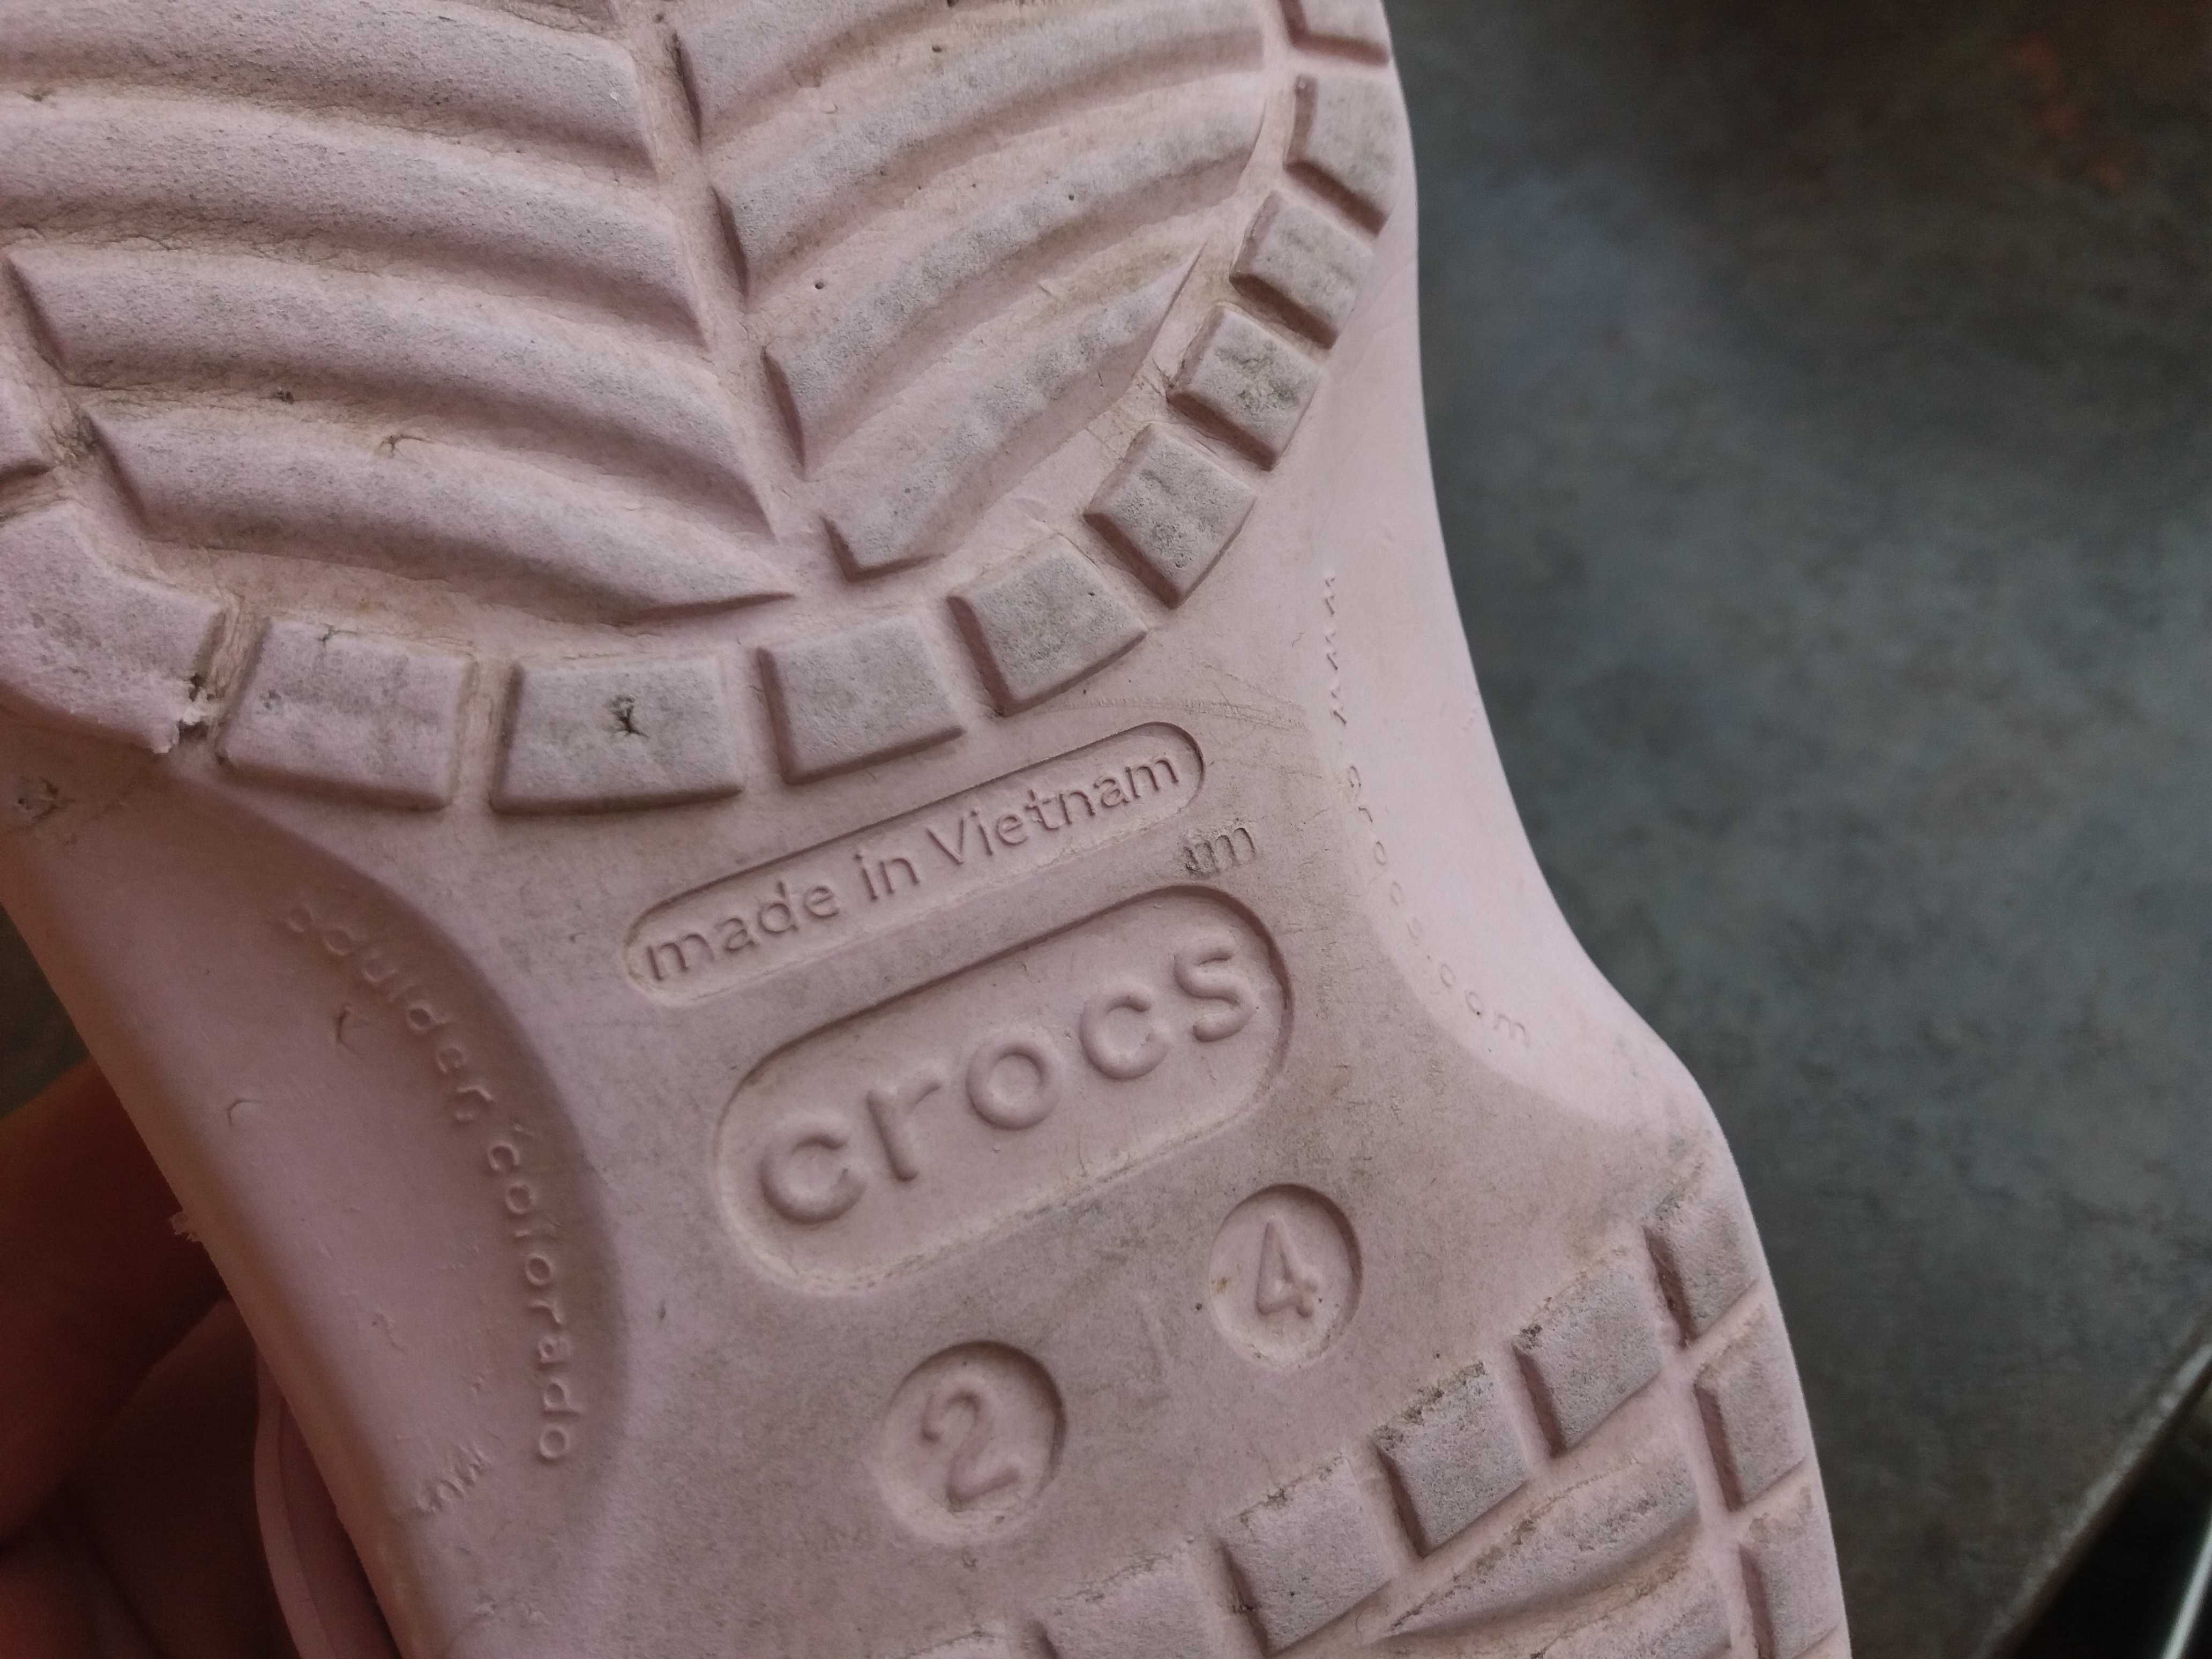 №35/36 Crocs-сандали,летни,отворени обувки,чехли,джапанки,крокс